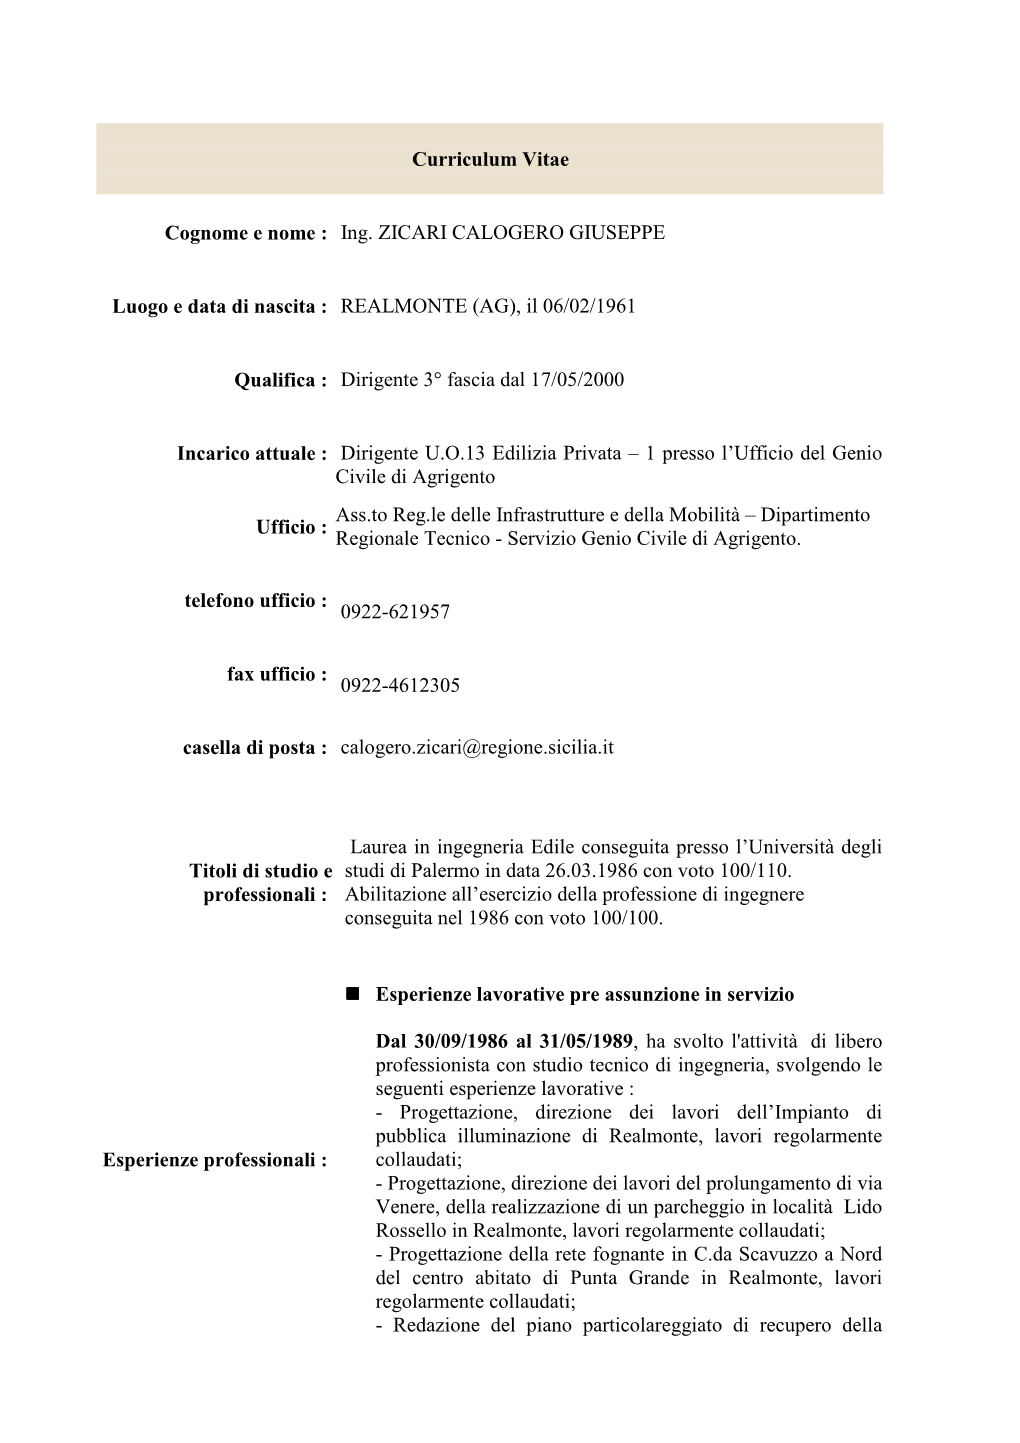 Curriculum Vitae ZICARI CALOGERO GIUSEPPE 30042015